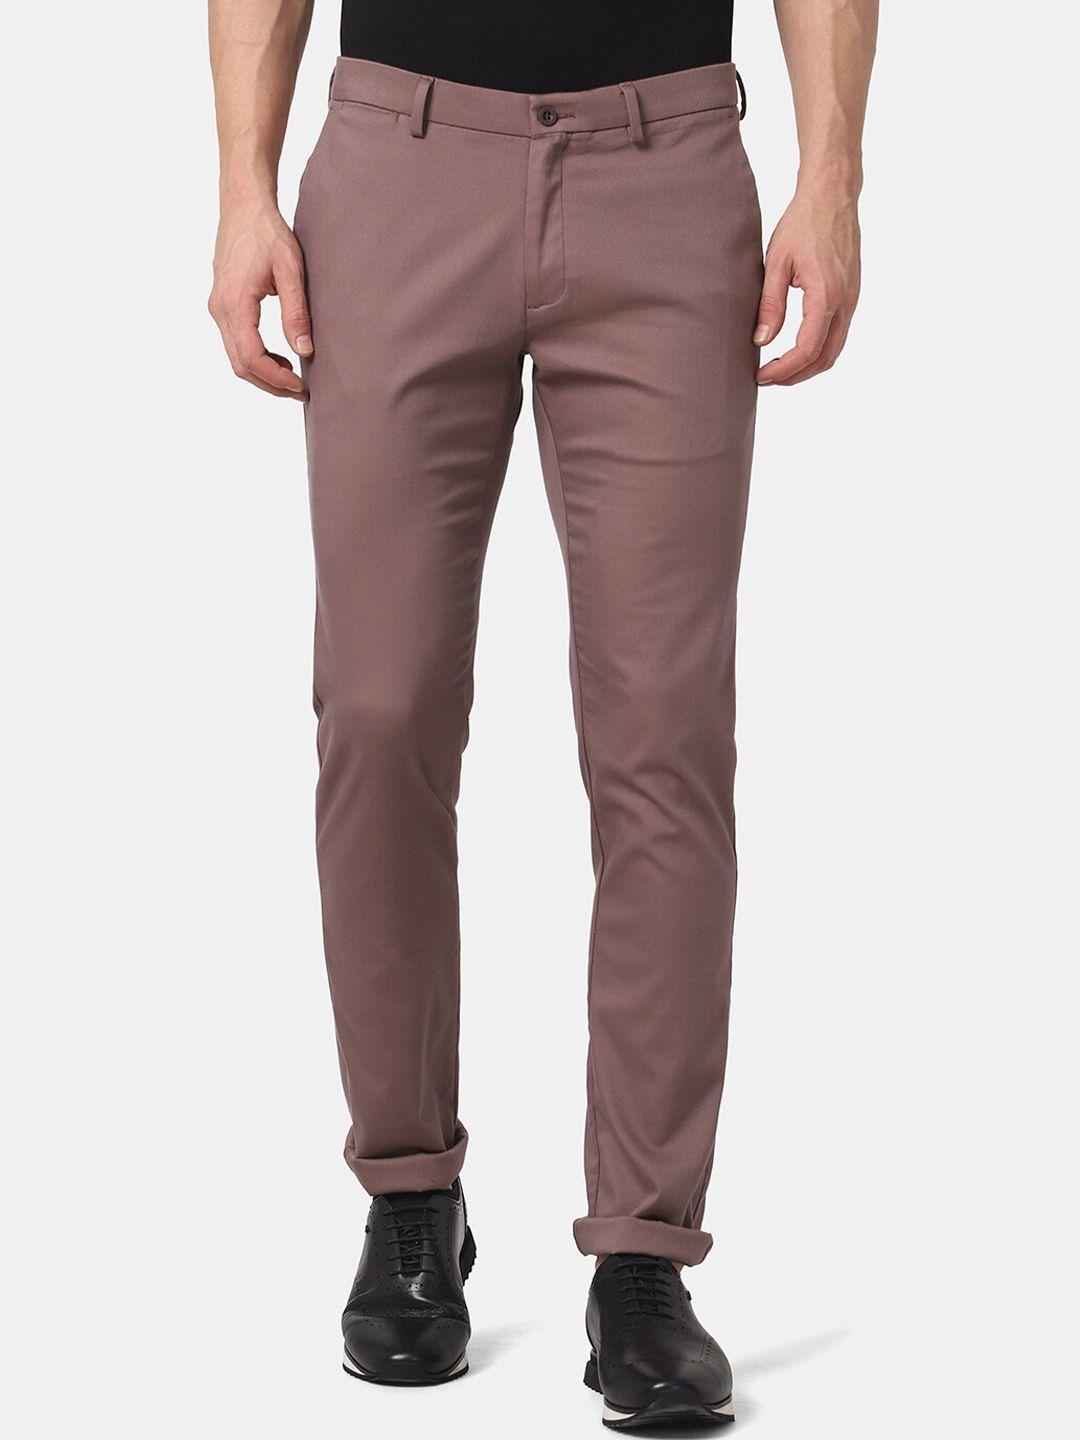 blackberrys techpro collection men pink slim fit low-rise trousers